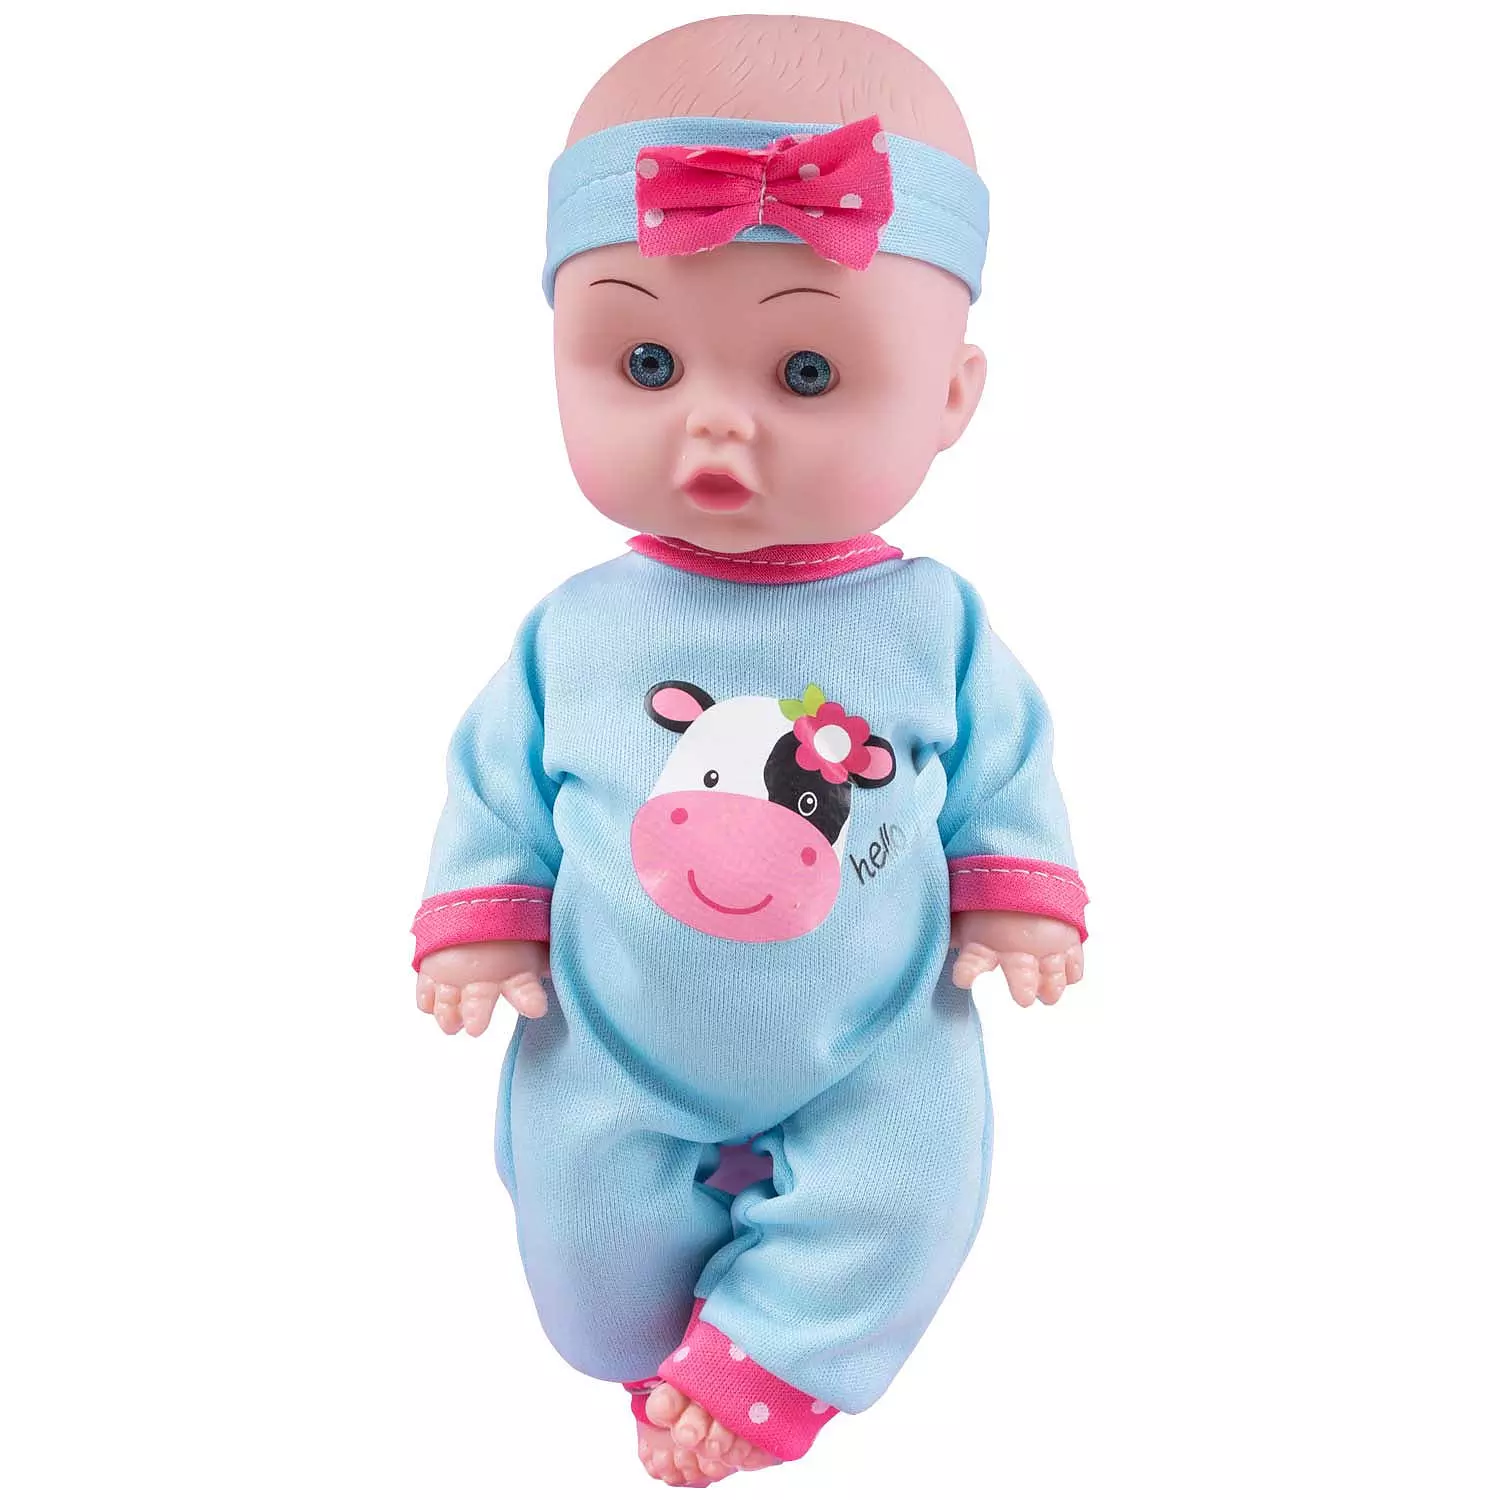 Cutie baby doll with headband, blue